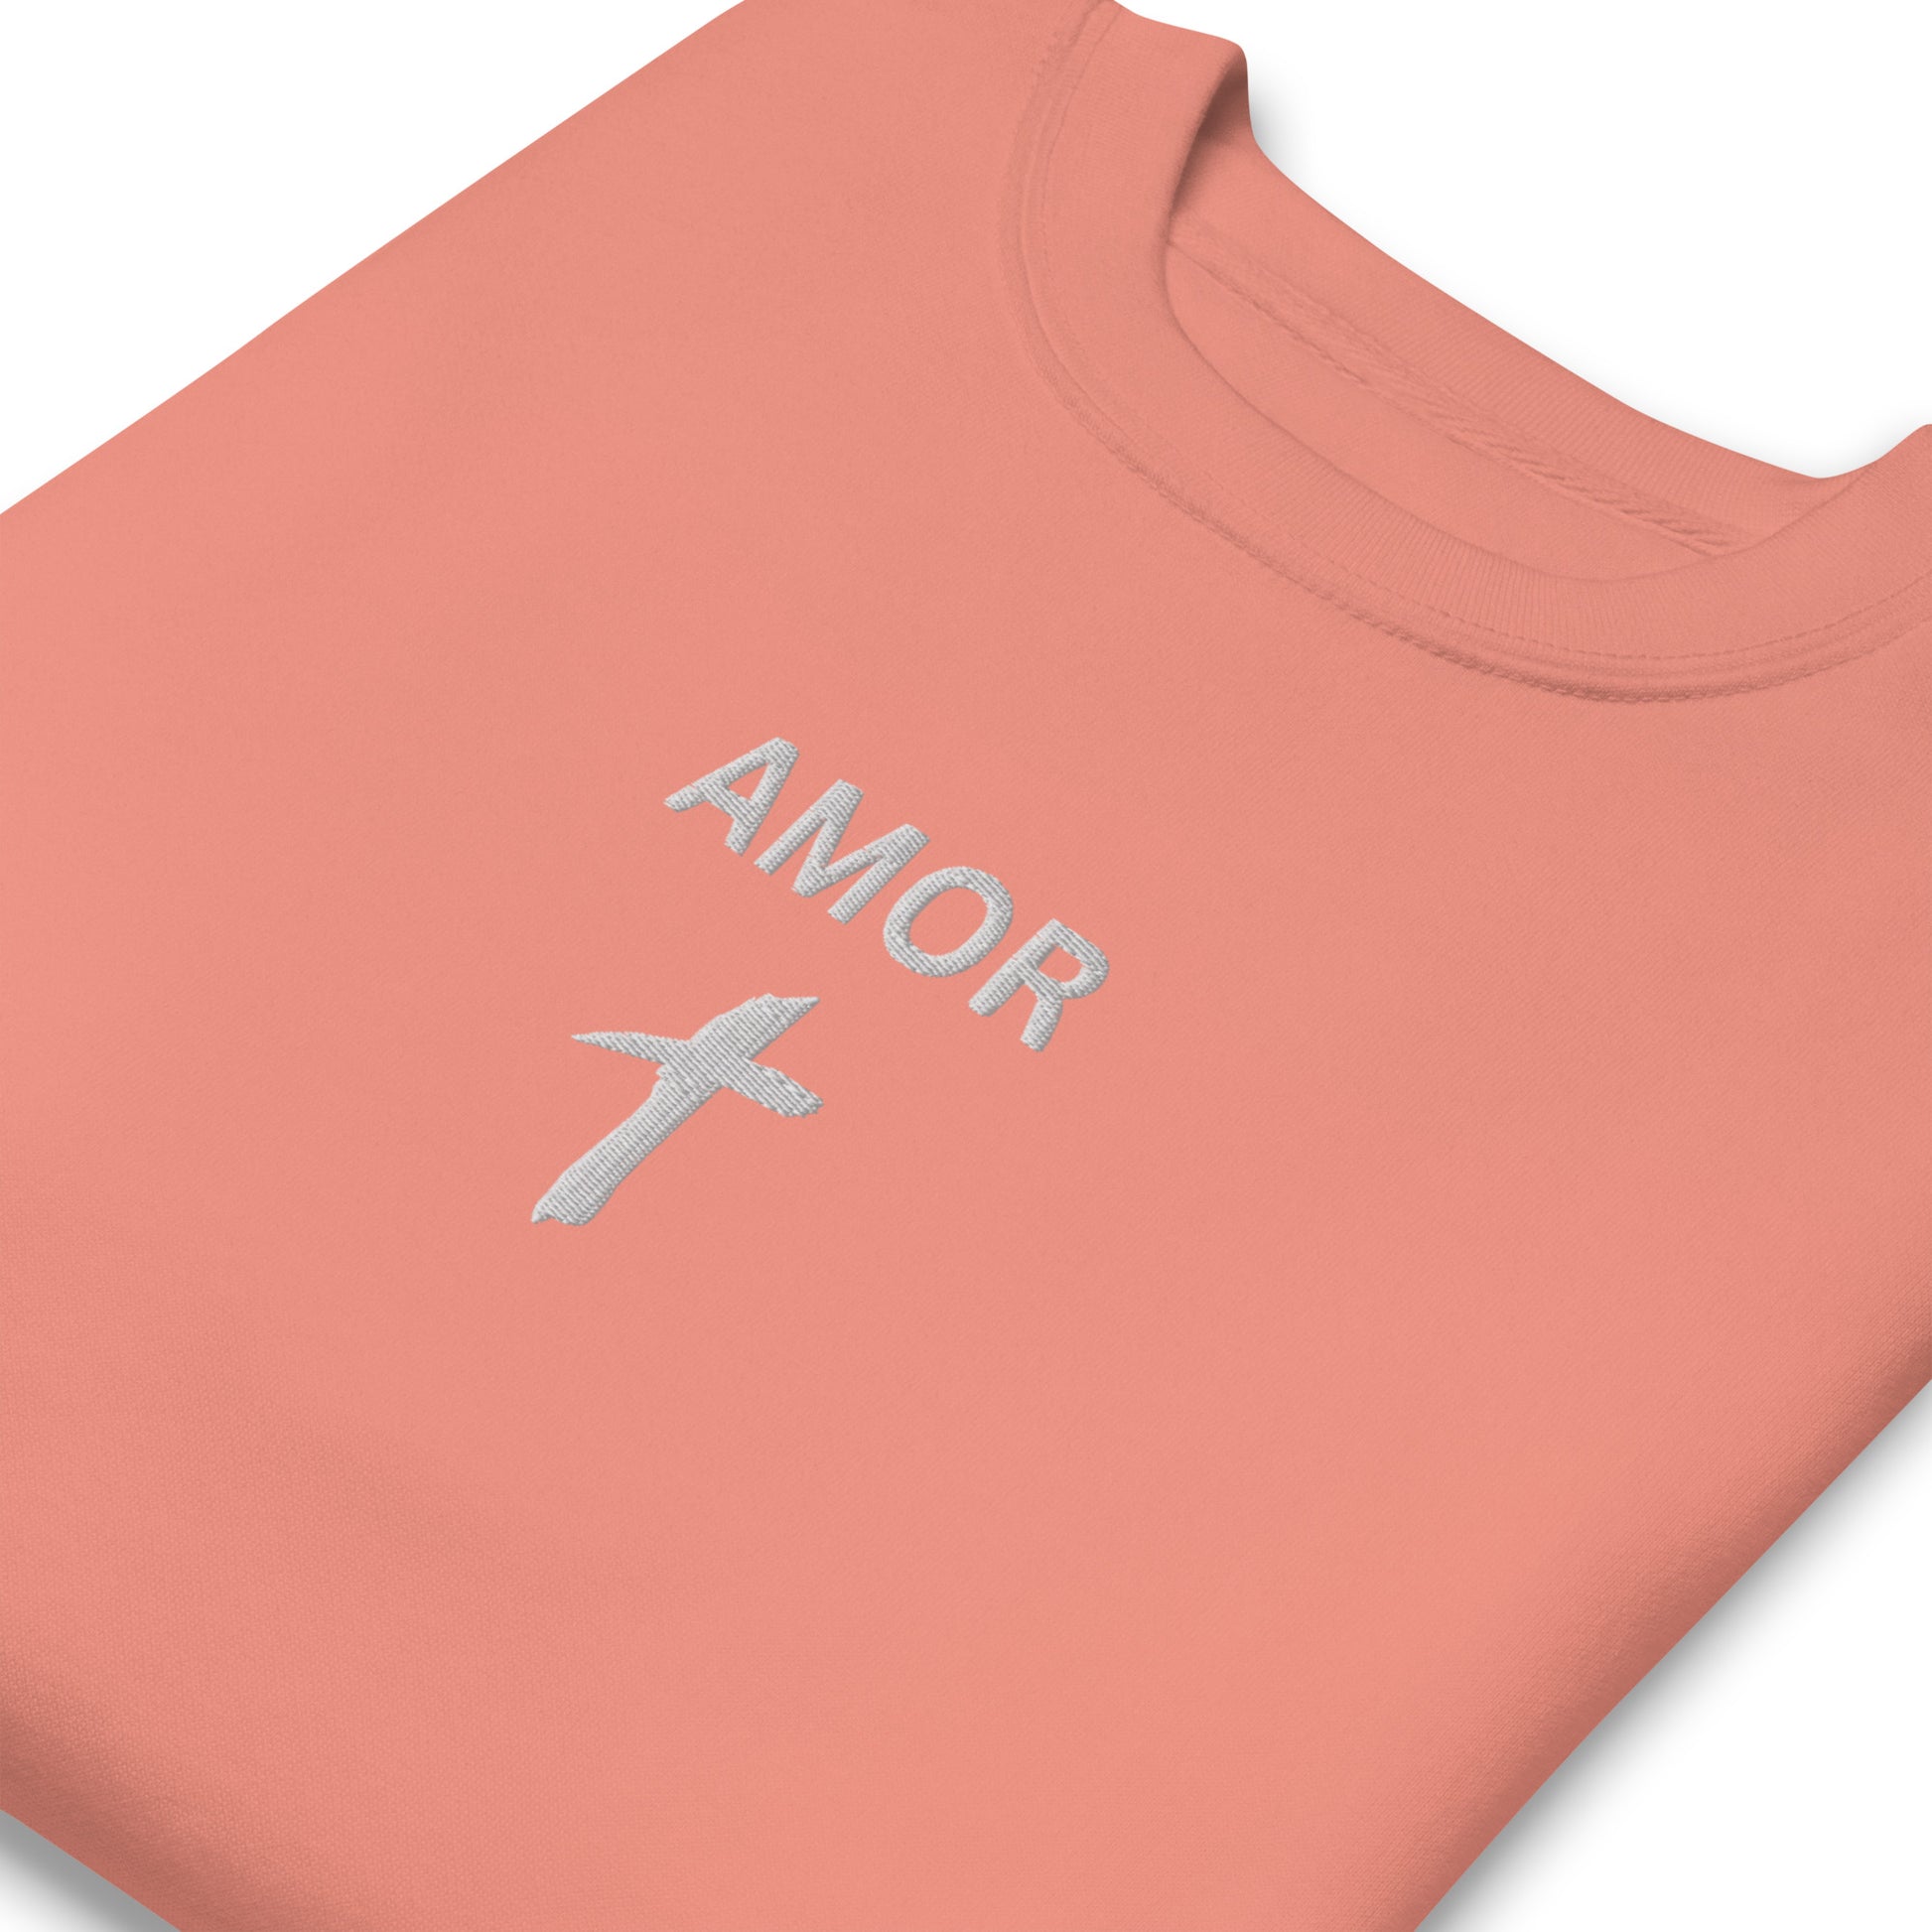 Men's Premium Embroidered "Amor" Sweatshirt - Humble & Faithful Co.